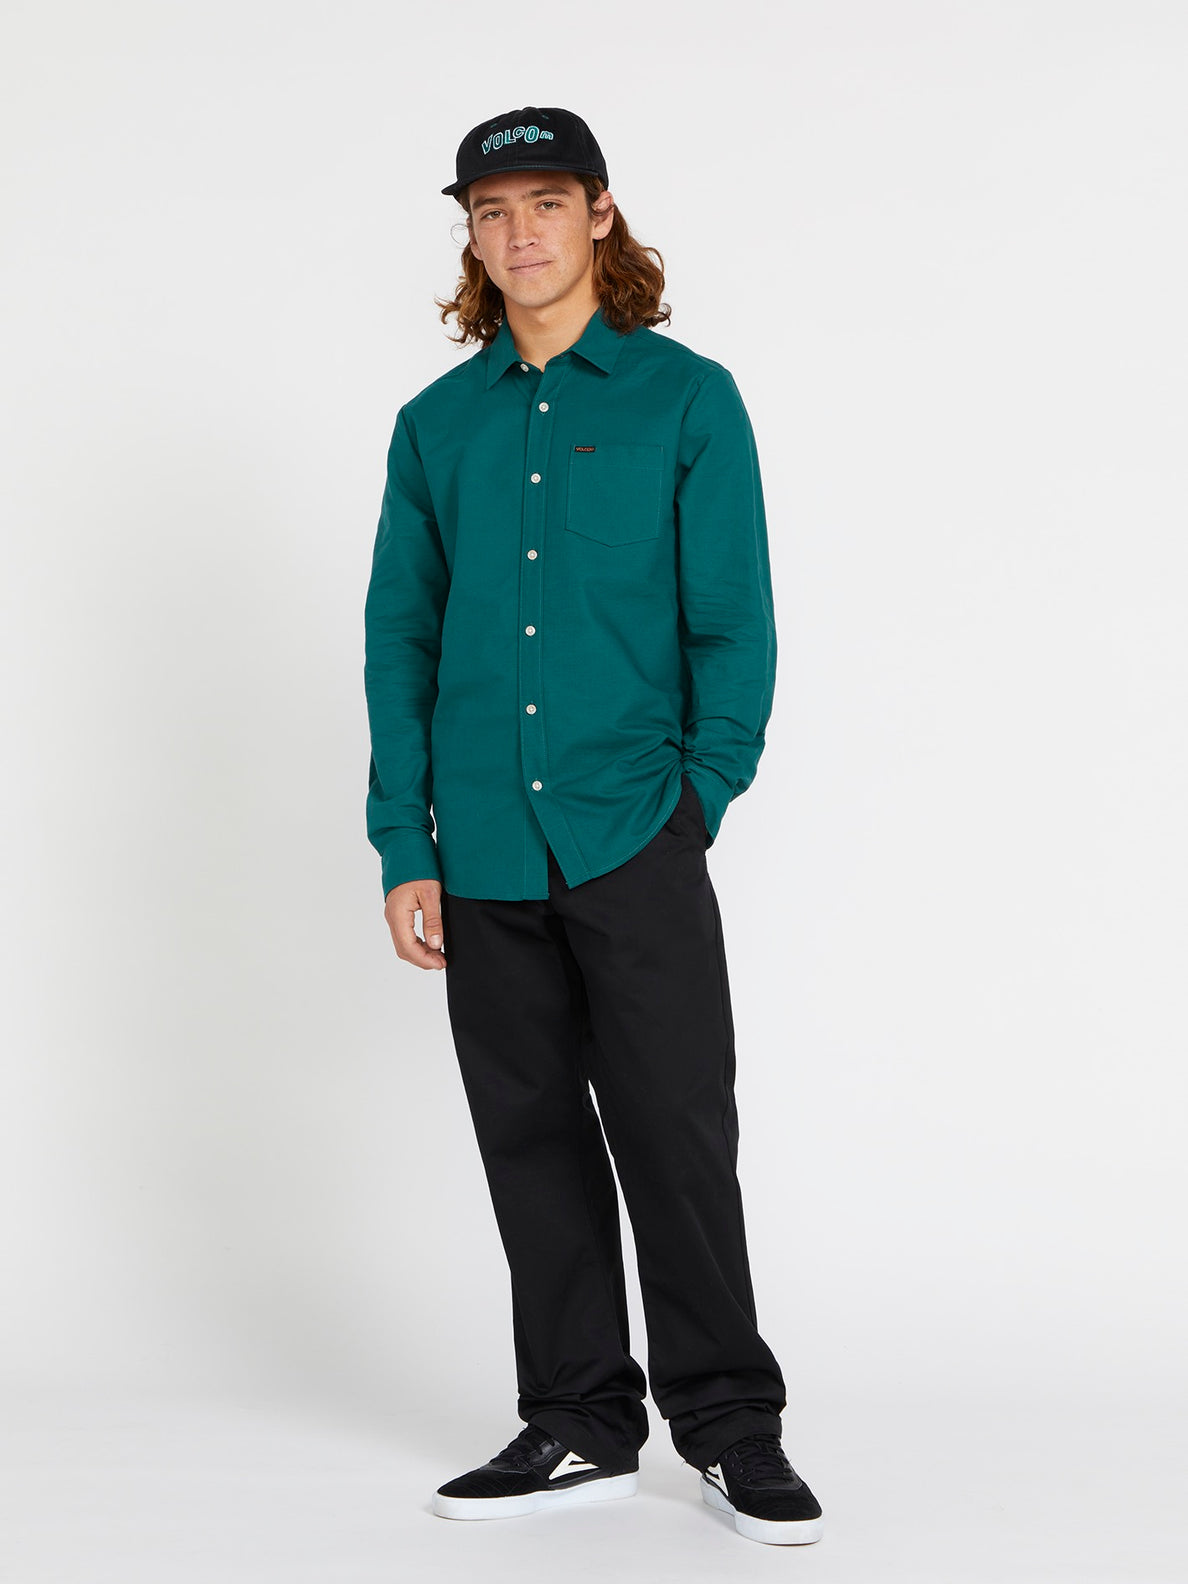 Veeco Oxford Long Sleeve Shirt - Ranger Green